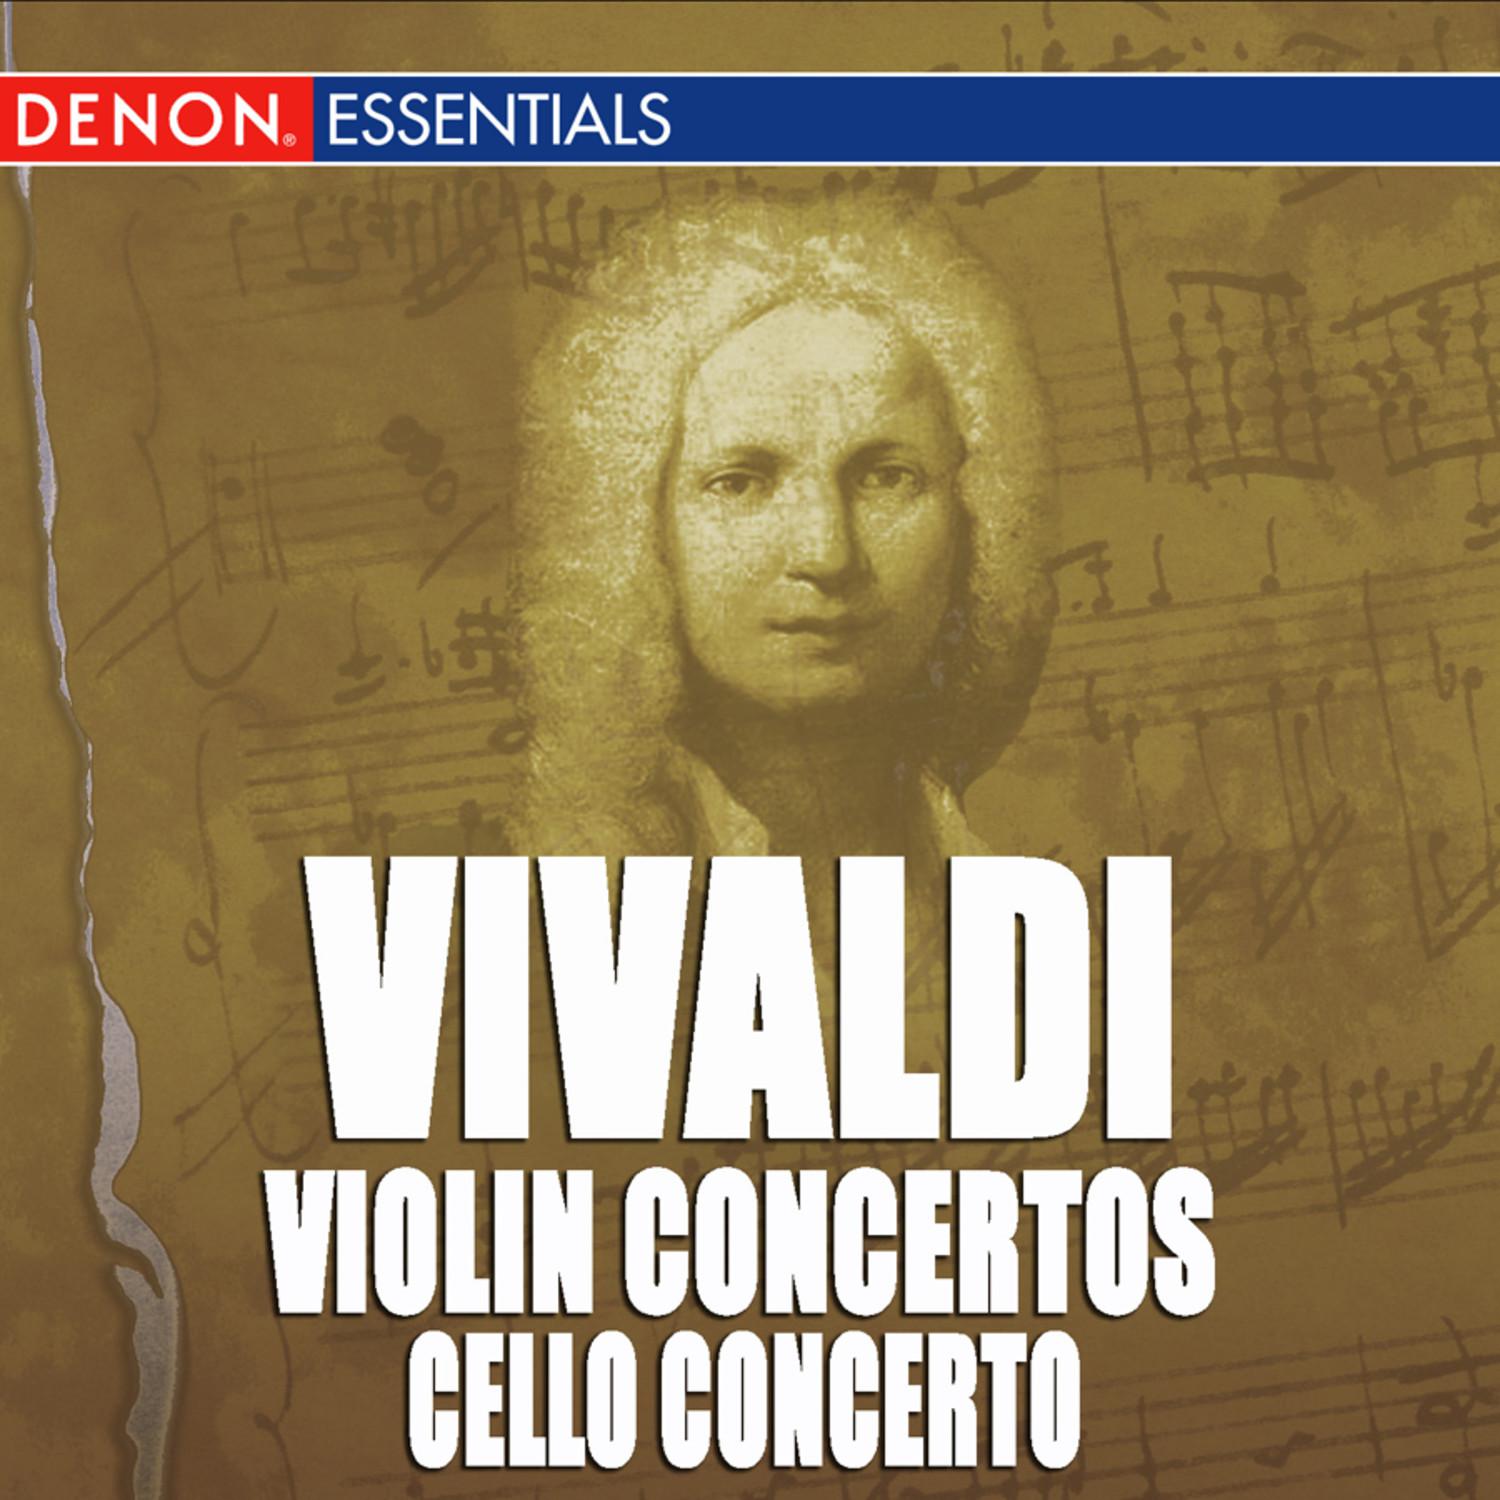 Concerto for 4 Violins, Strings and Bc No. 4 in E Minor, Op. 3 RV 550: III. Adagio